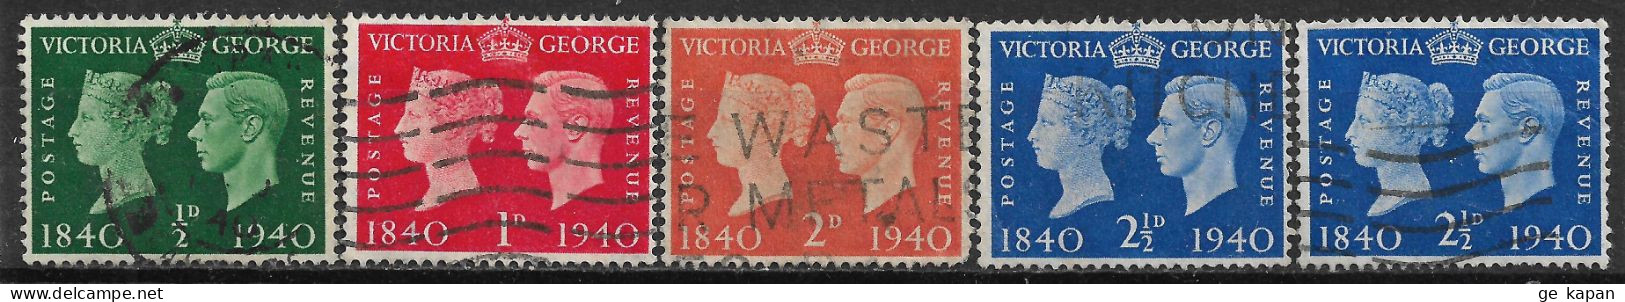 1940 GREAT BRITAIN Set Of 5 Used Stamps (Scott # 252,253,255,256) CV $2.60 - Gebraucht